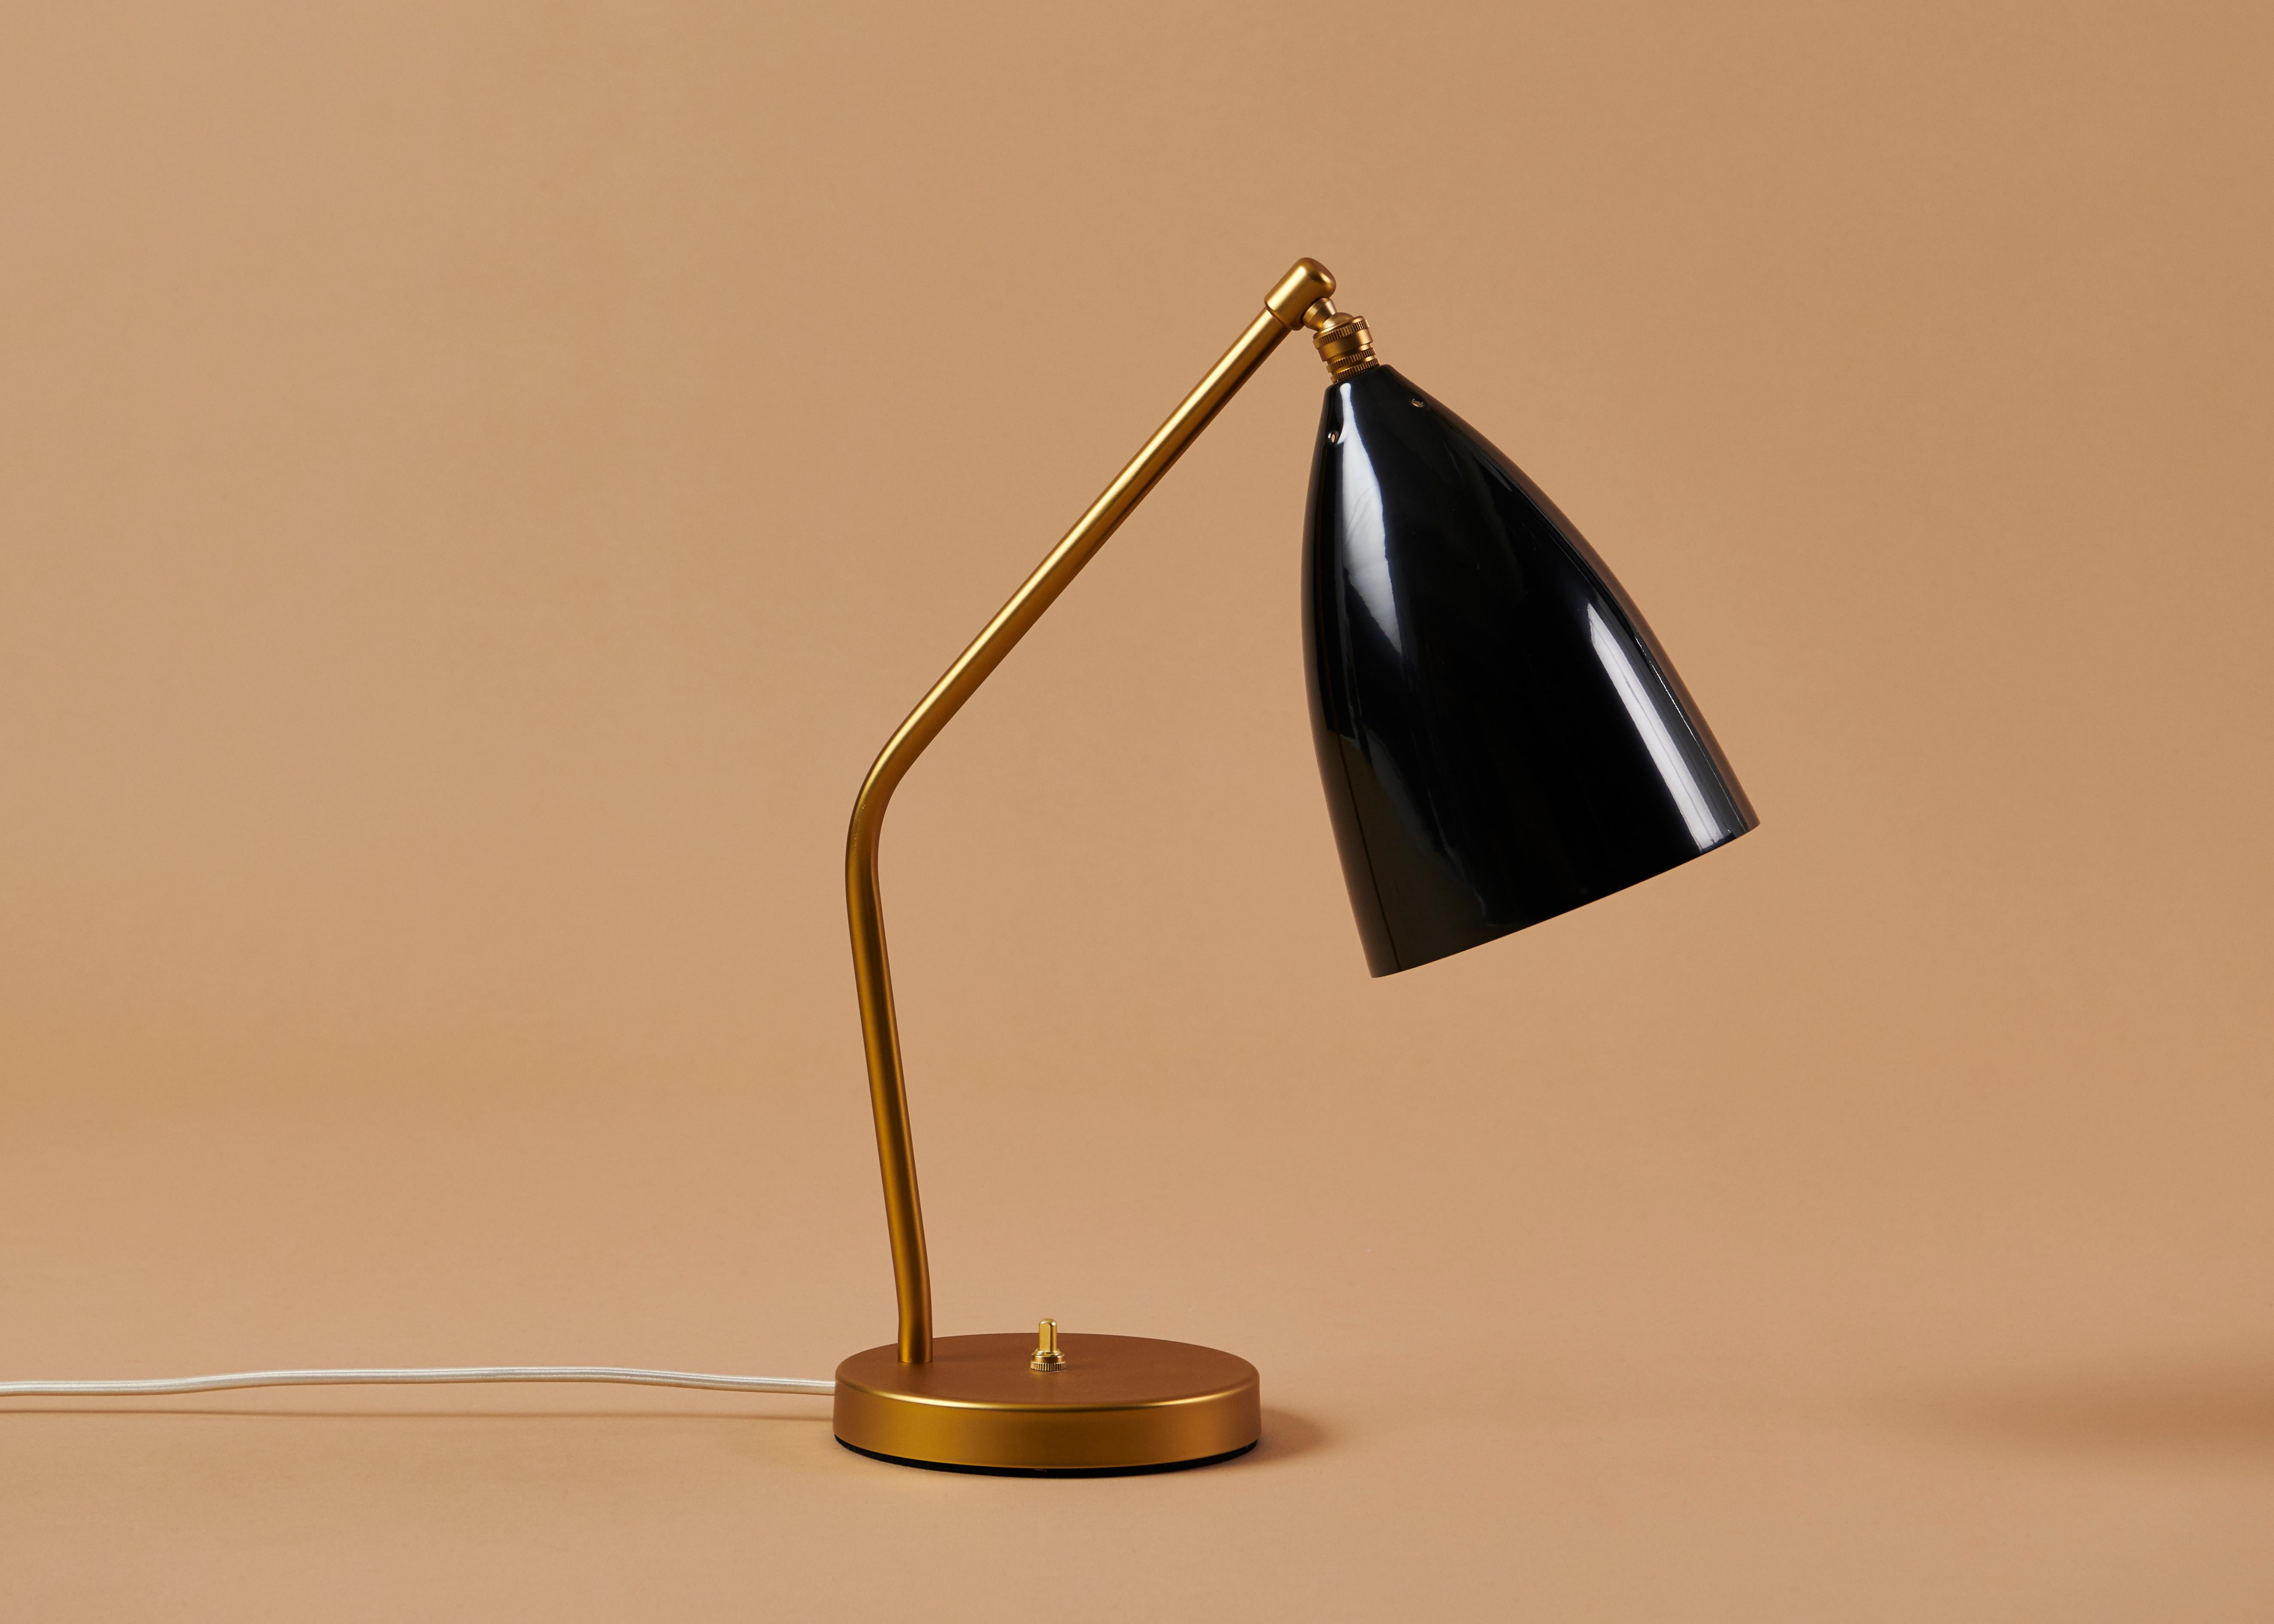 Powder-Coated Greta Magnusson Grossman 'Grasshopper' Table Lamp in Glossy Black For Sale